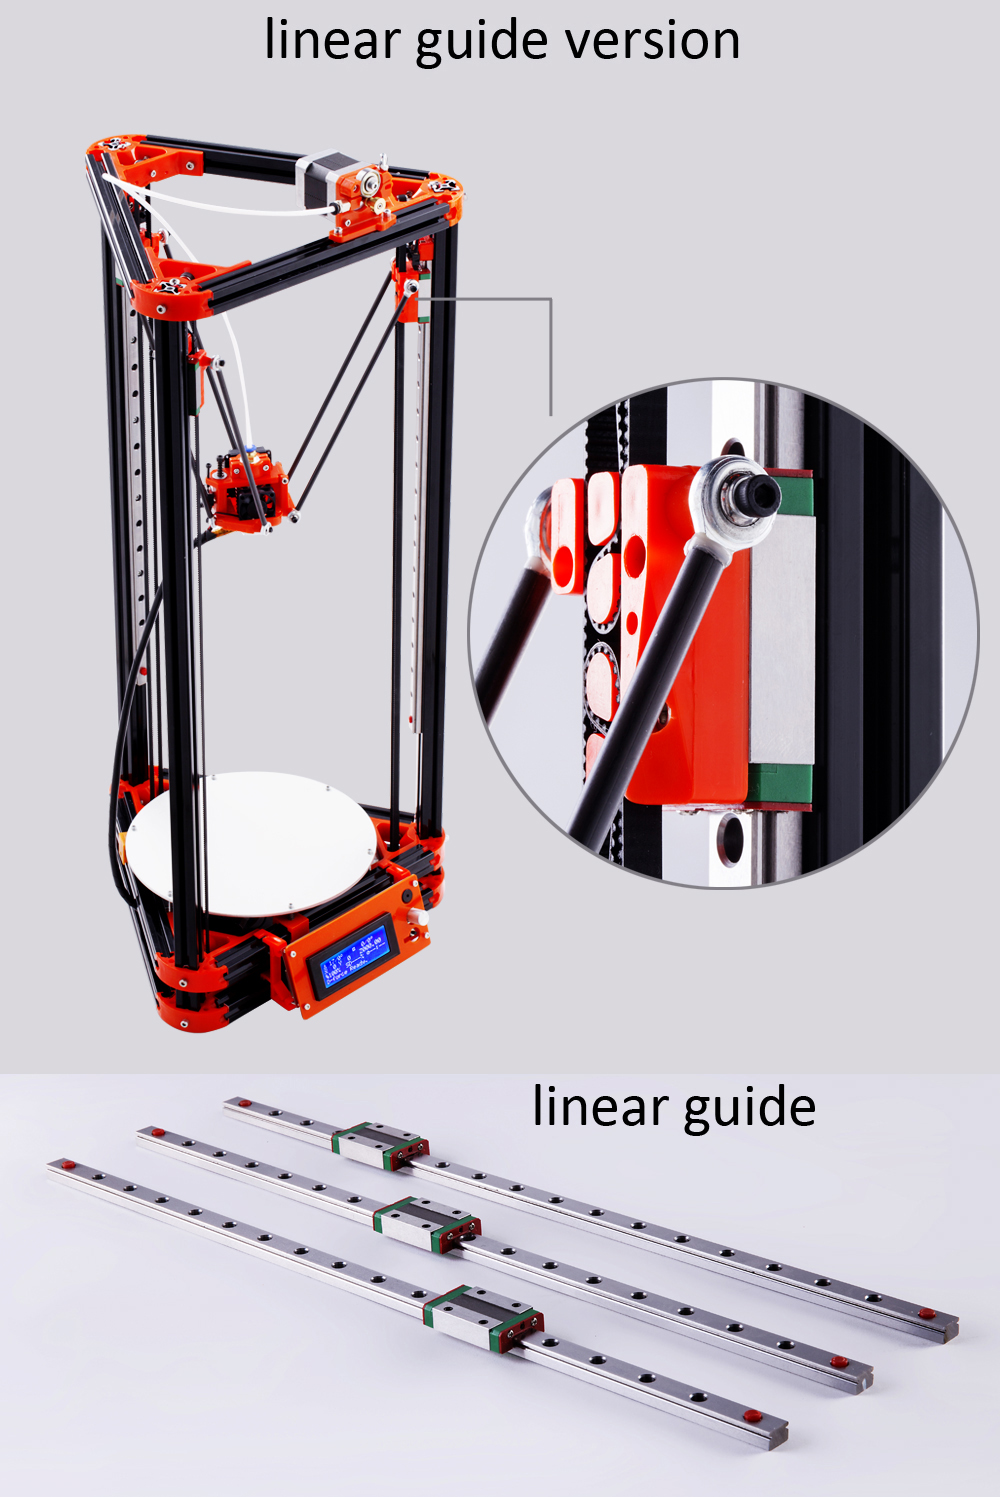 FLSUN Auto leveling Kossel Metal Delta 3D Printer Kits - FLSUN KOSSEL Delta Linear 3